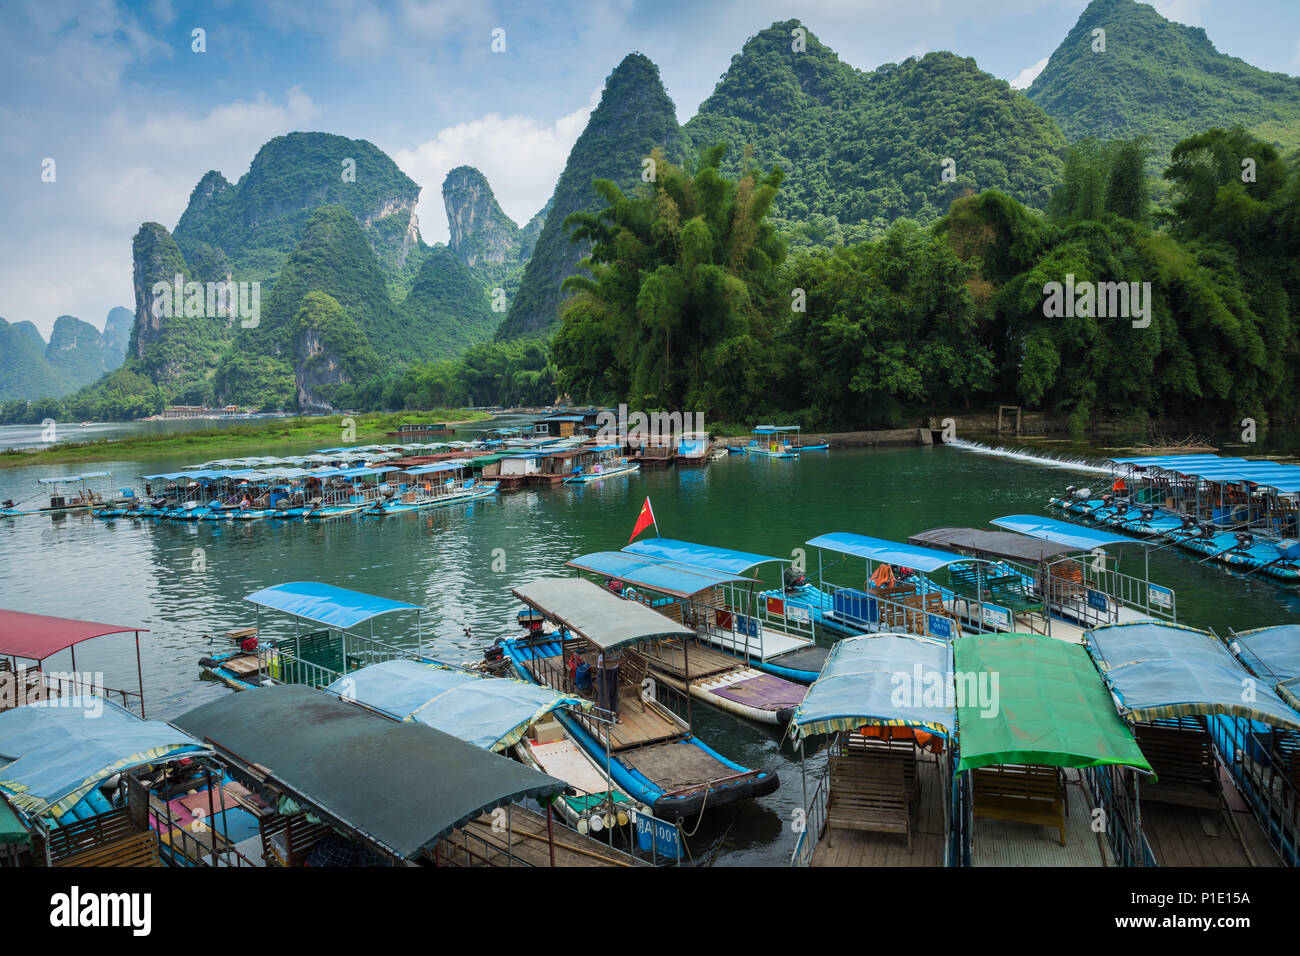 XINGPING, CHINA - MAY 29, 2018: Li River (Lijiang River). Pleasure boats at the pier in Xingping Town Stock Photo